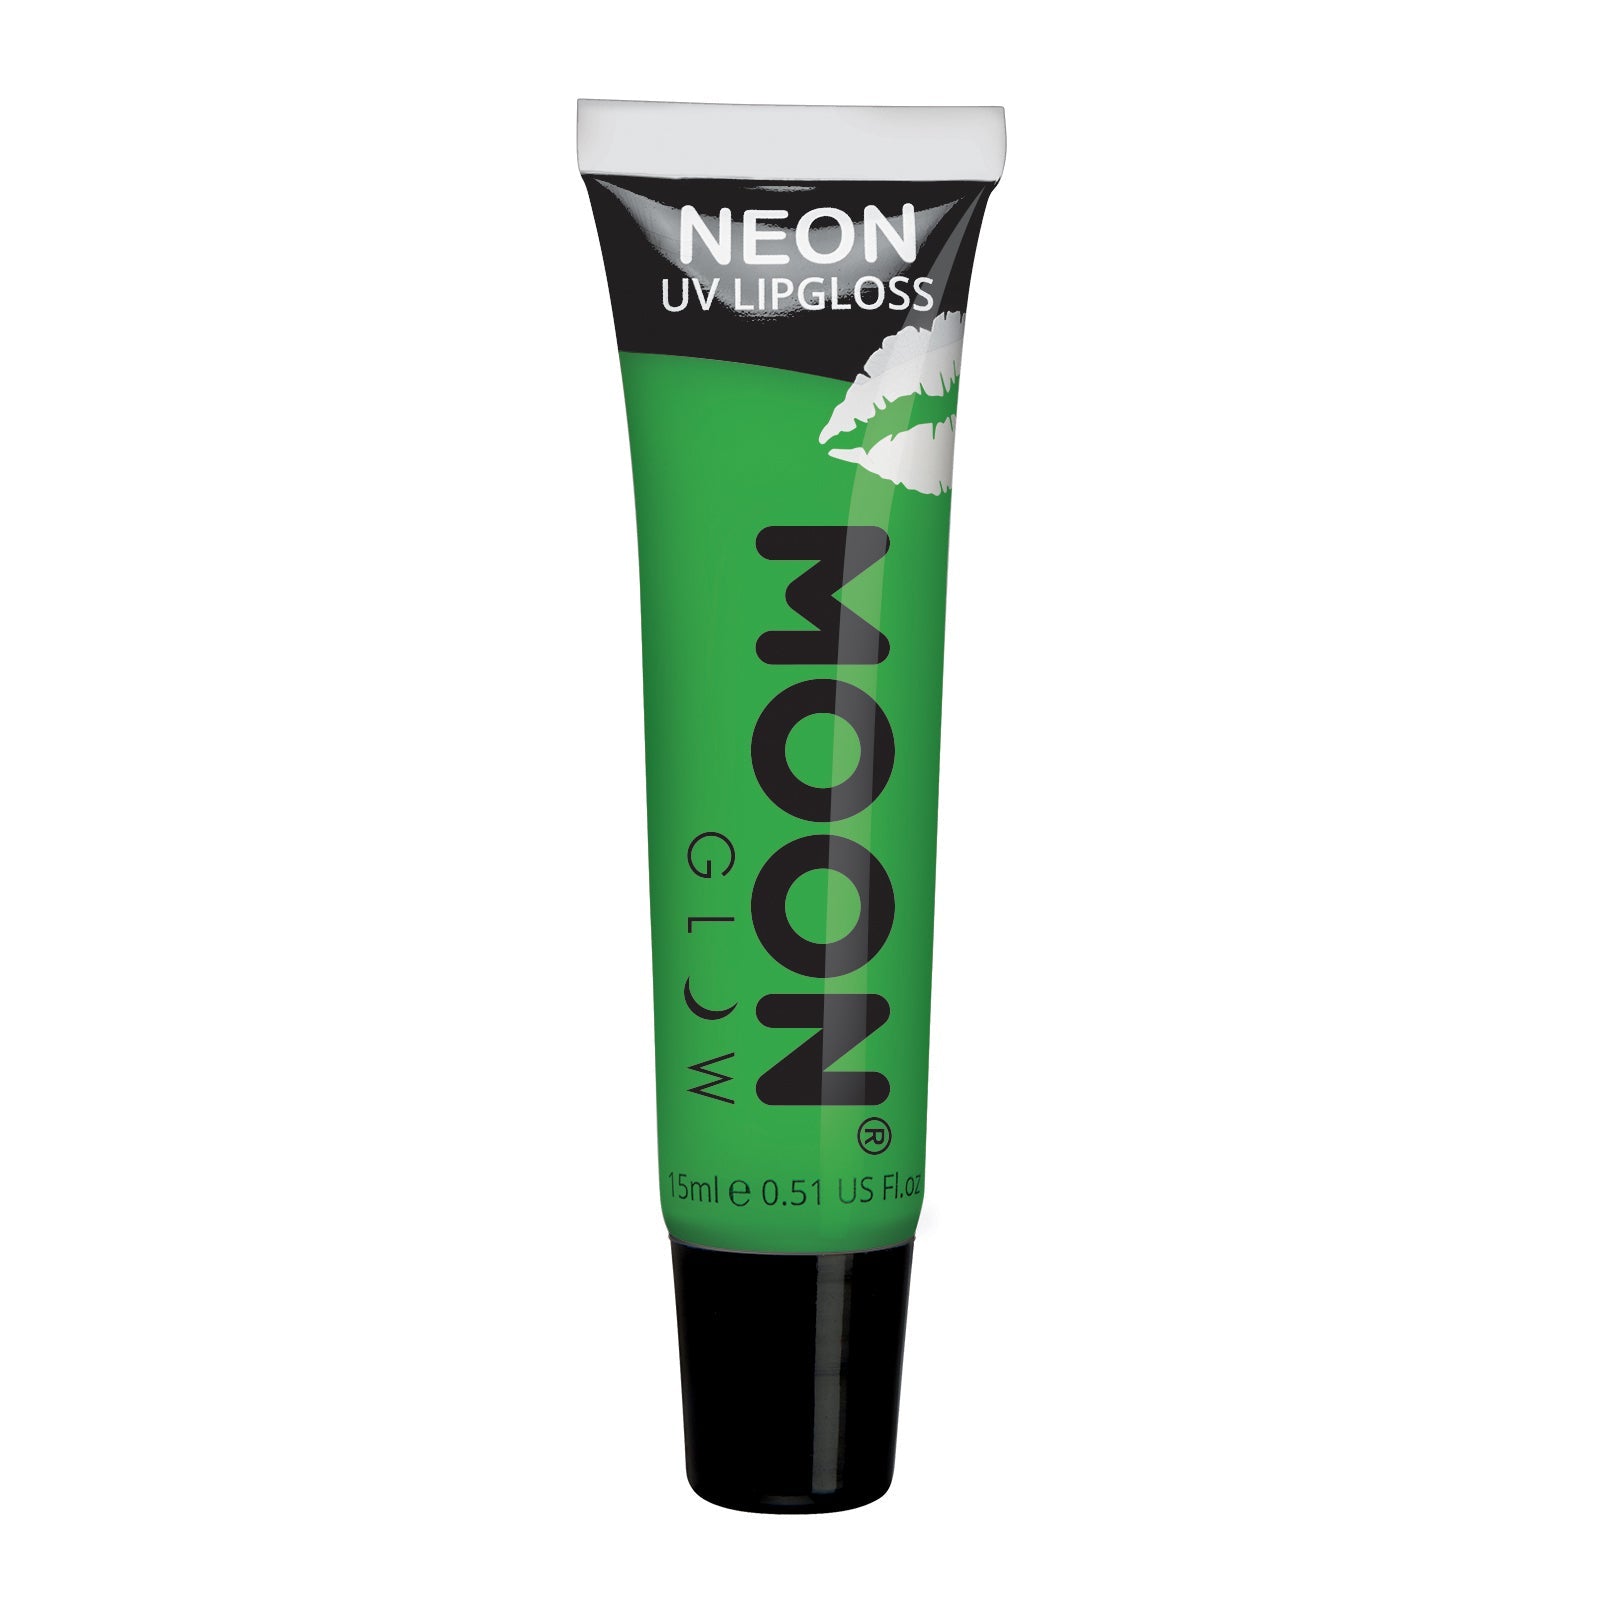 Intense Green Apple - Neon UV Glow Blacklight Lip Gloss, 15mL. Cosmetically certified, FDA & Health Canada compliant, cruelty free and vegan.